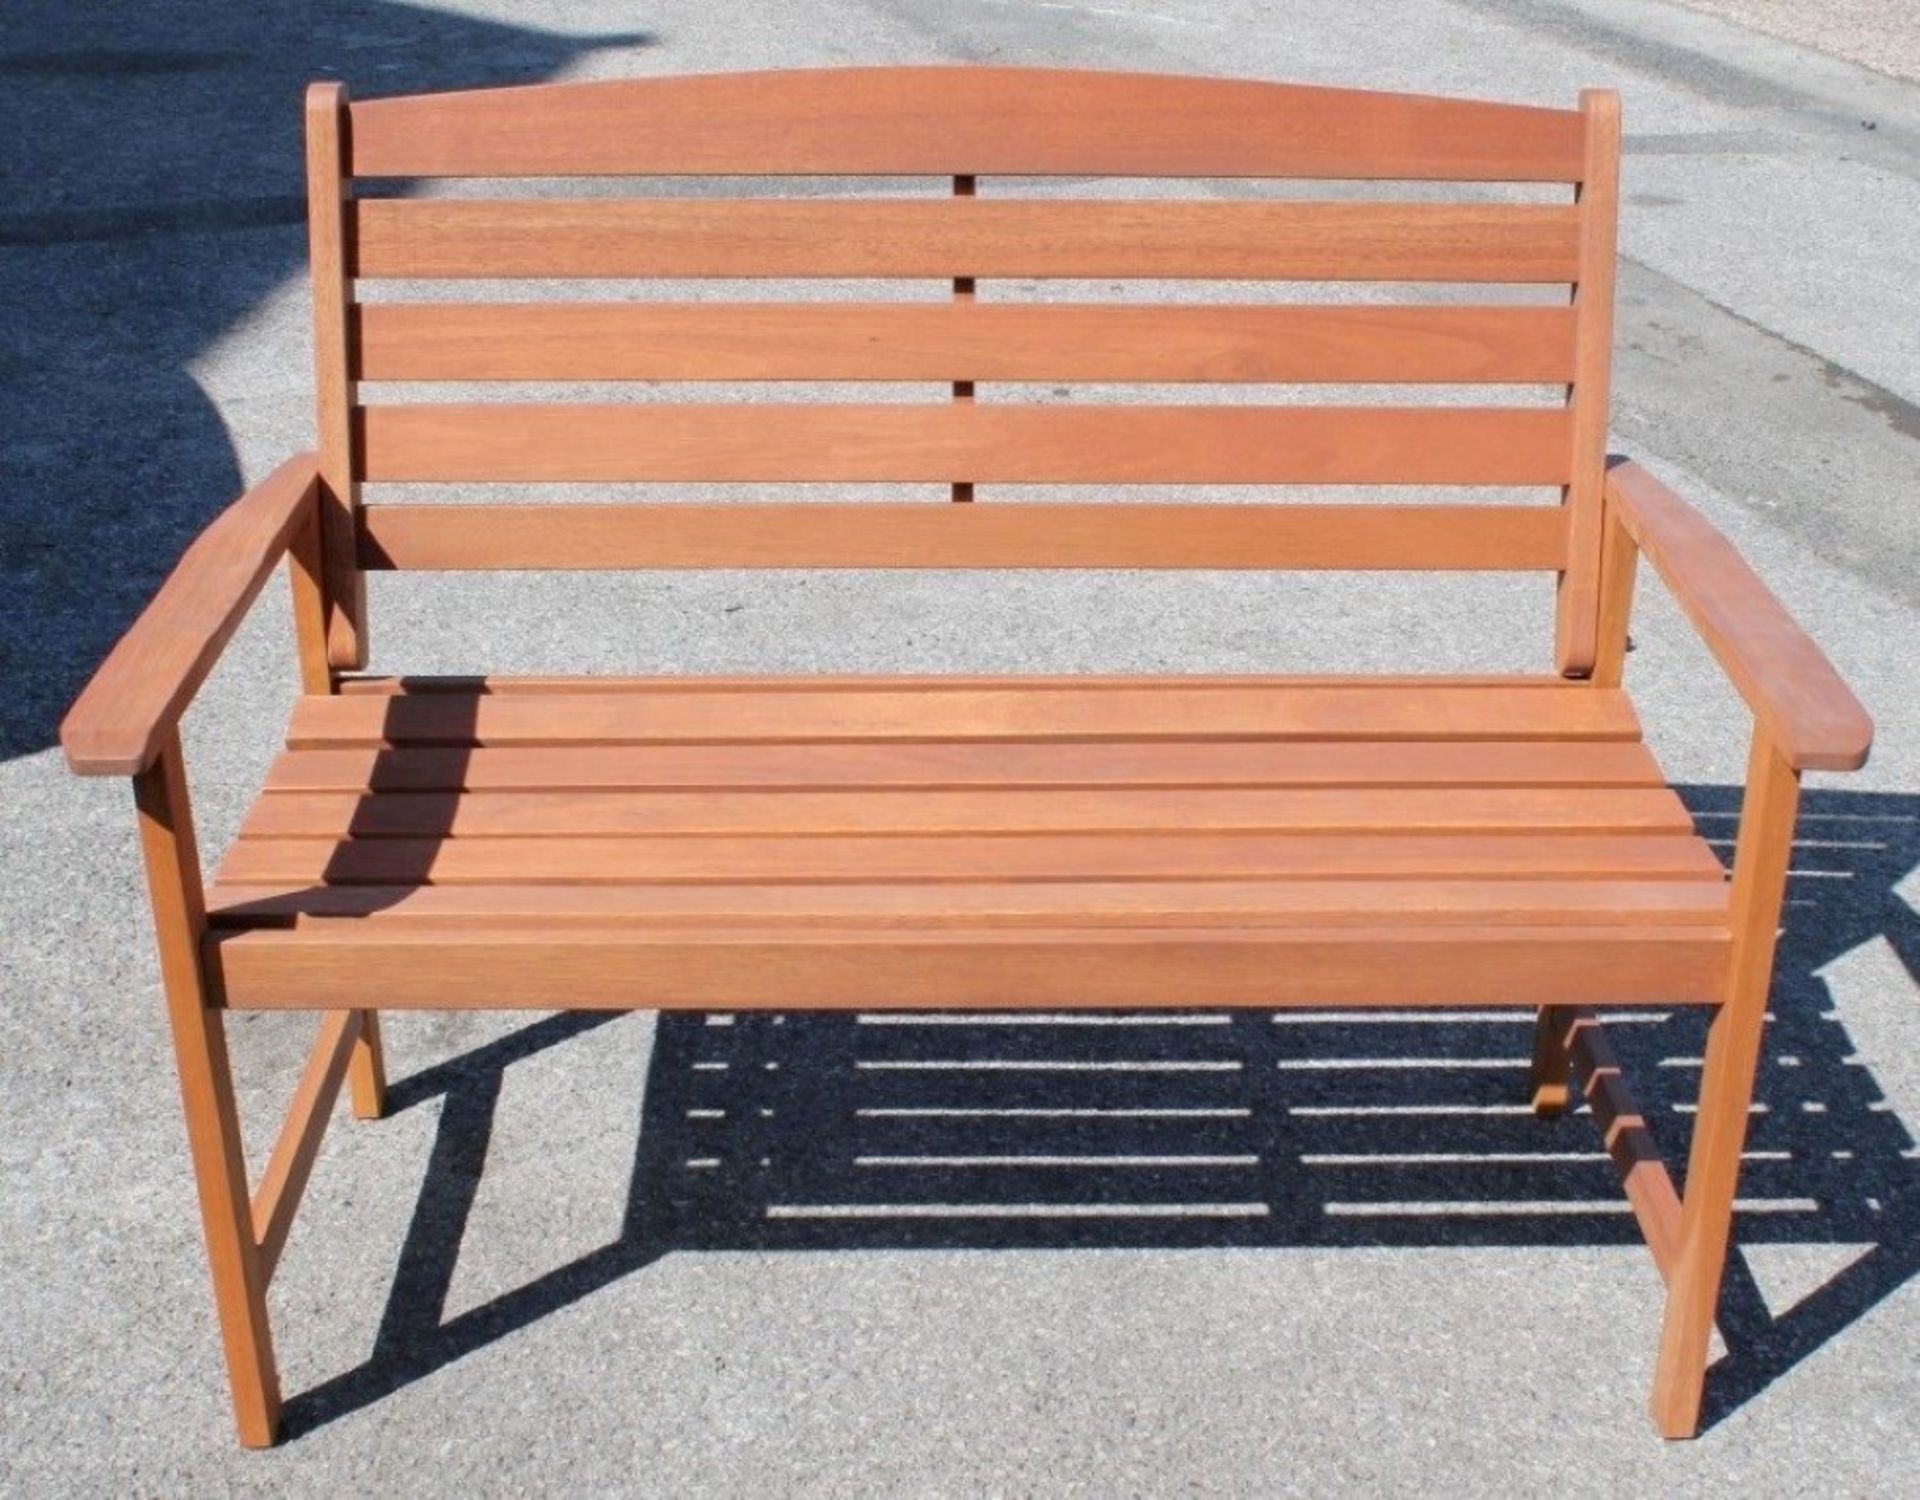 1 x 5-Piece "Macau Nassau" Garden Furniture Set - Includes Bench, Extending Table & 3 x Arm Chairs - - Image 4 of 9